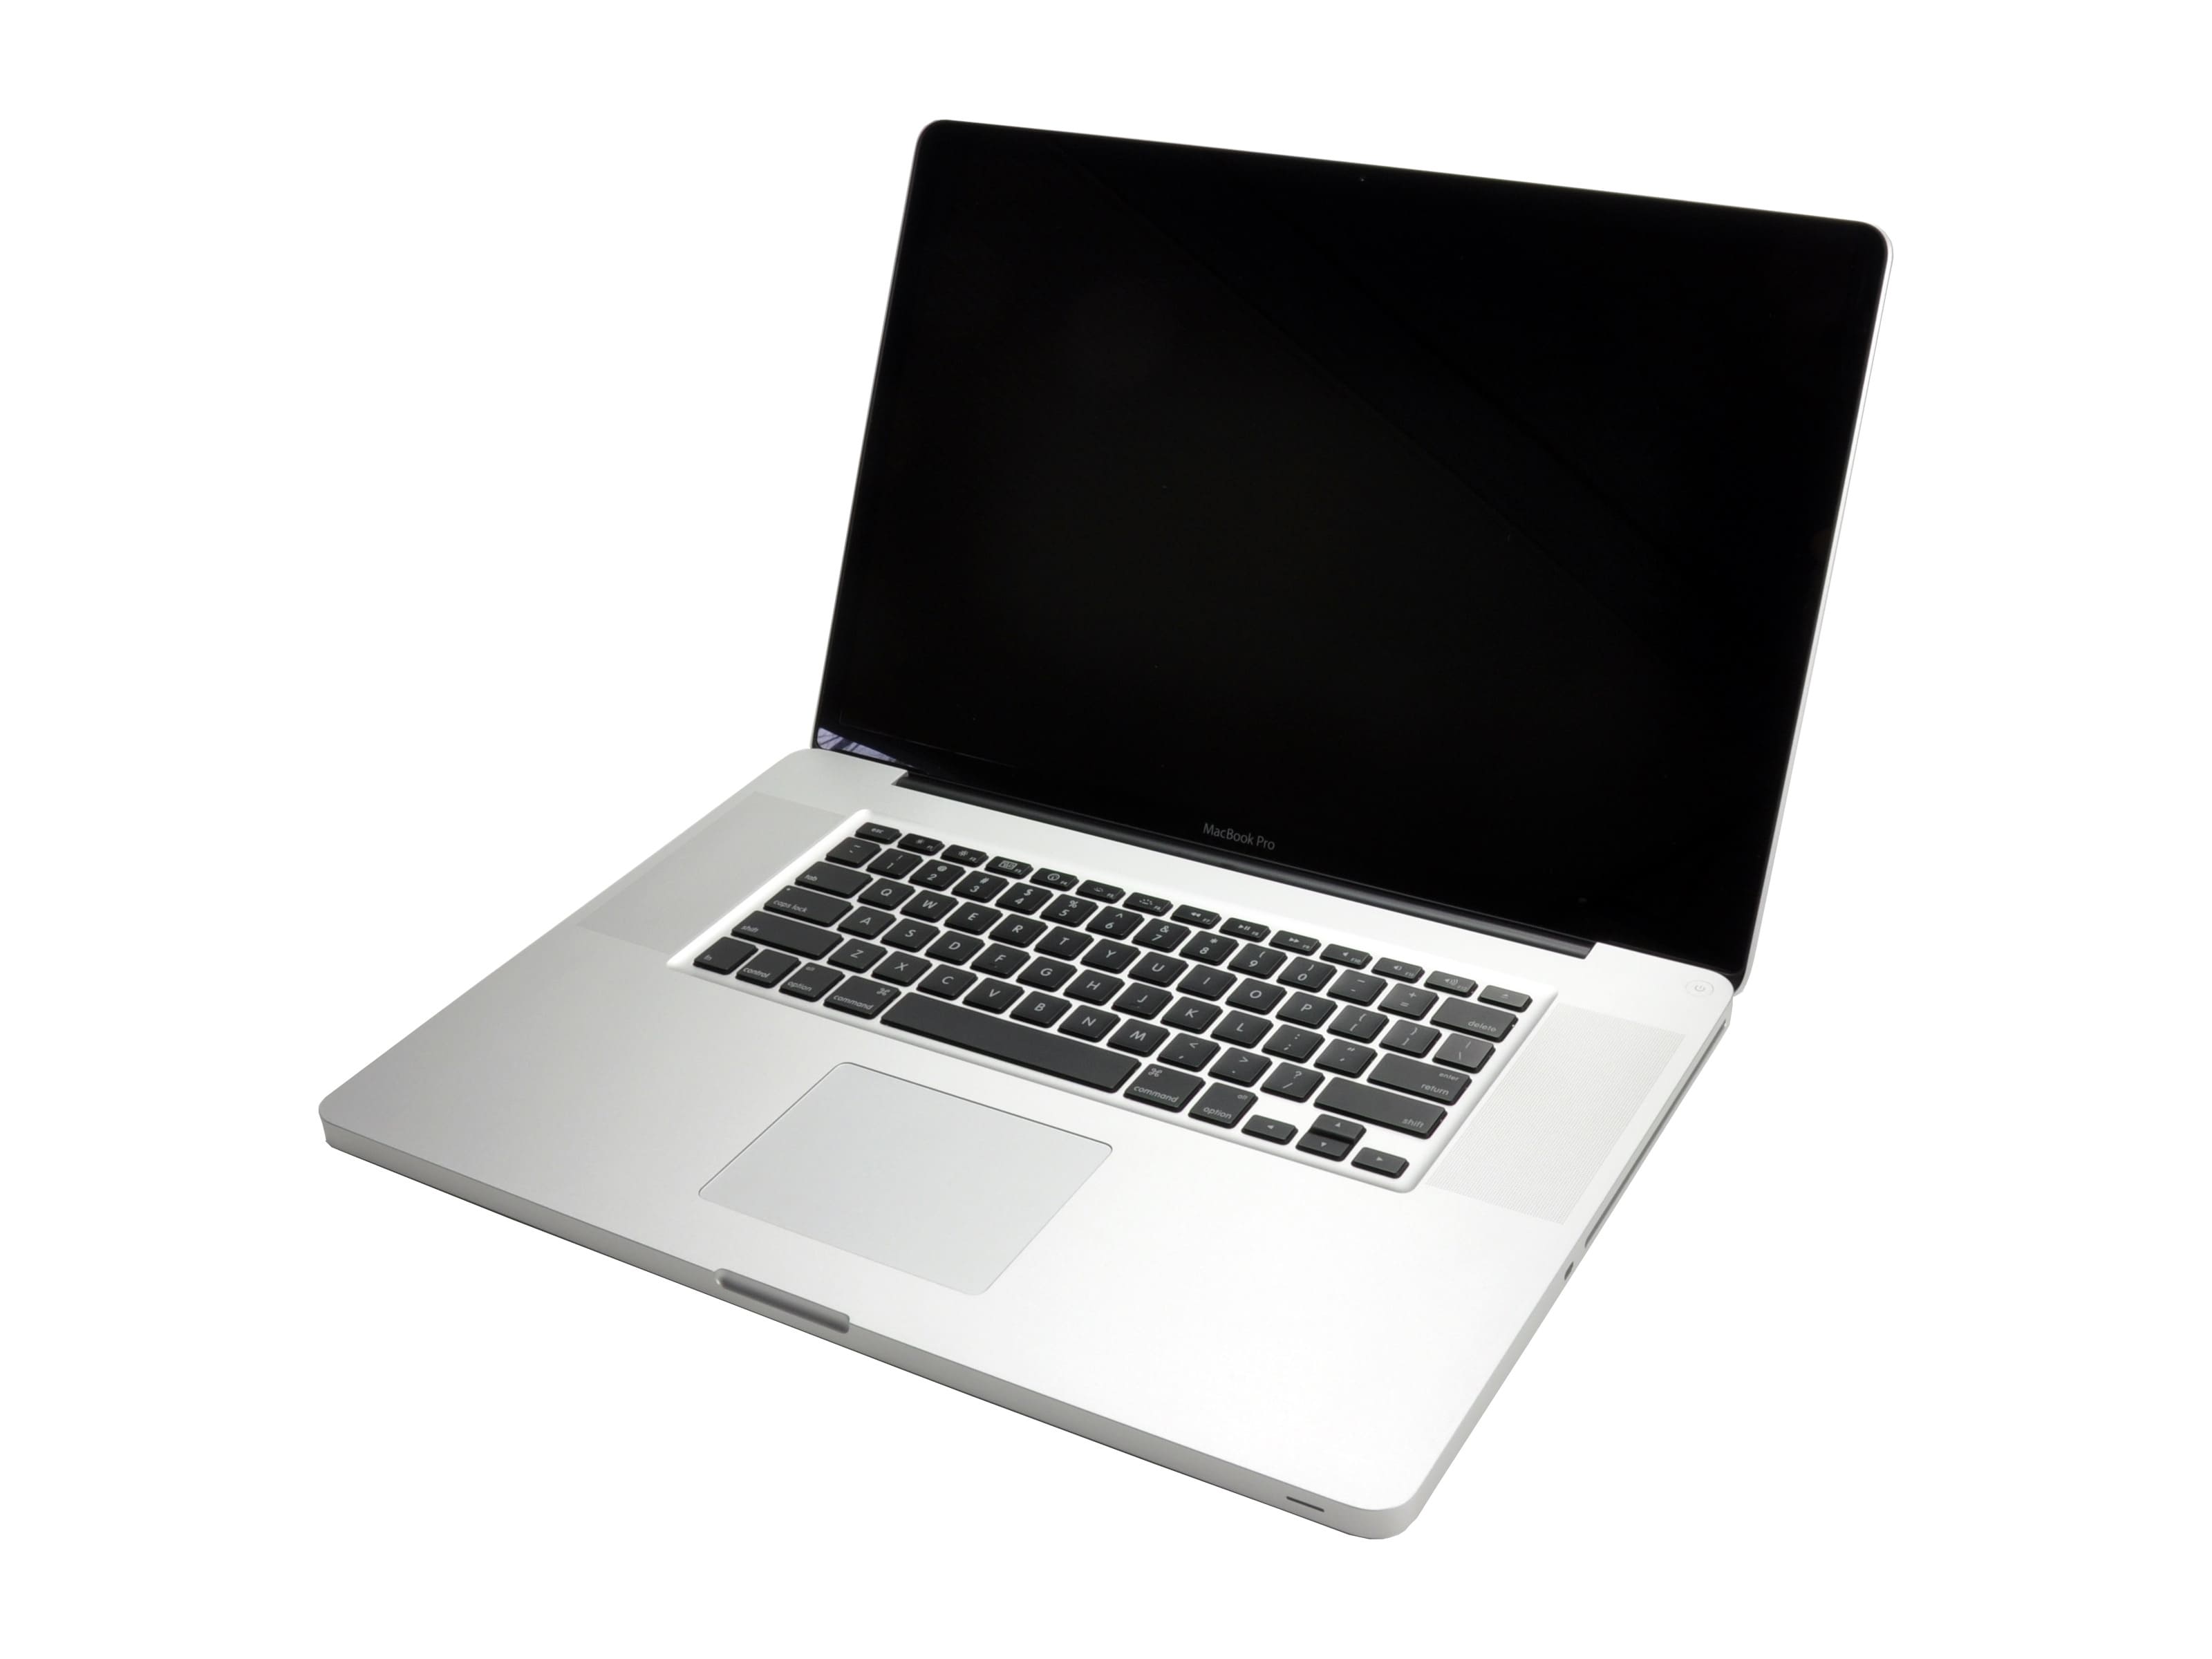 Macの電源が入らない原因と対処法 Macbookair Proを復活させよう Apple Geek Labo